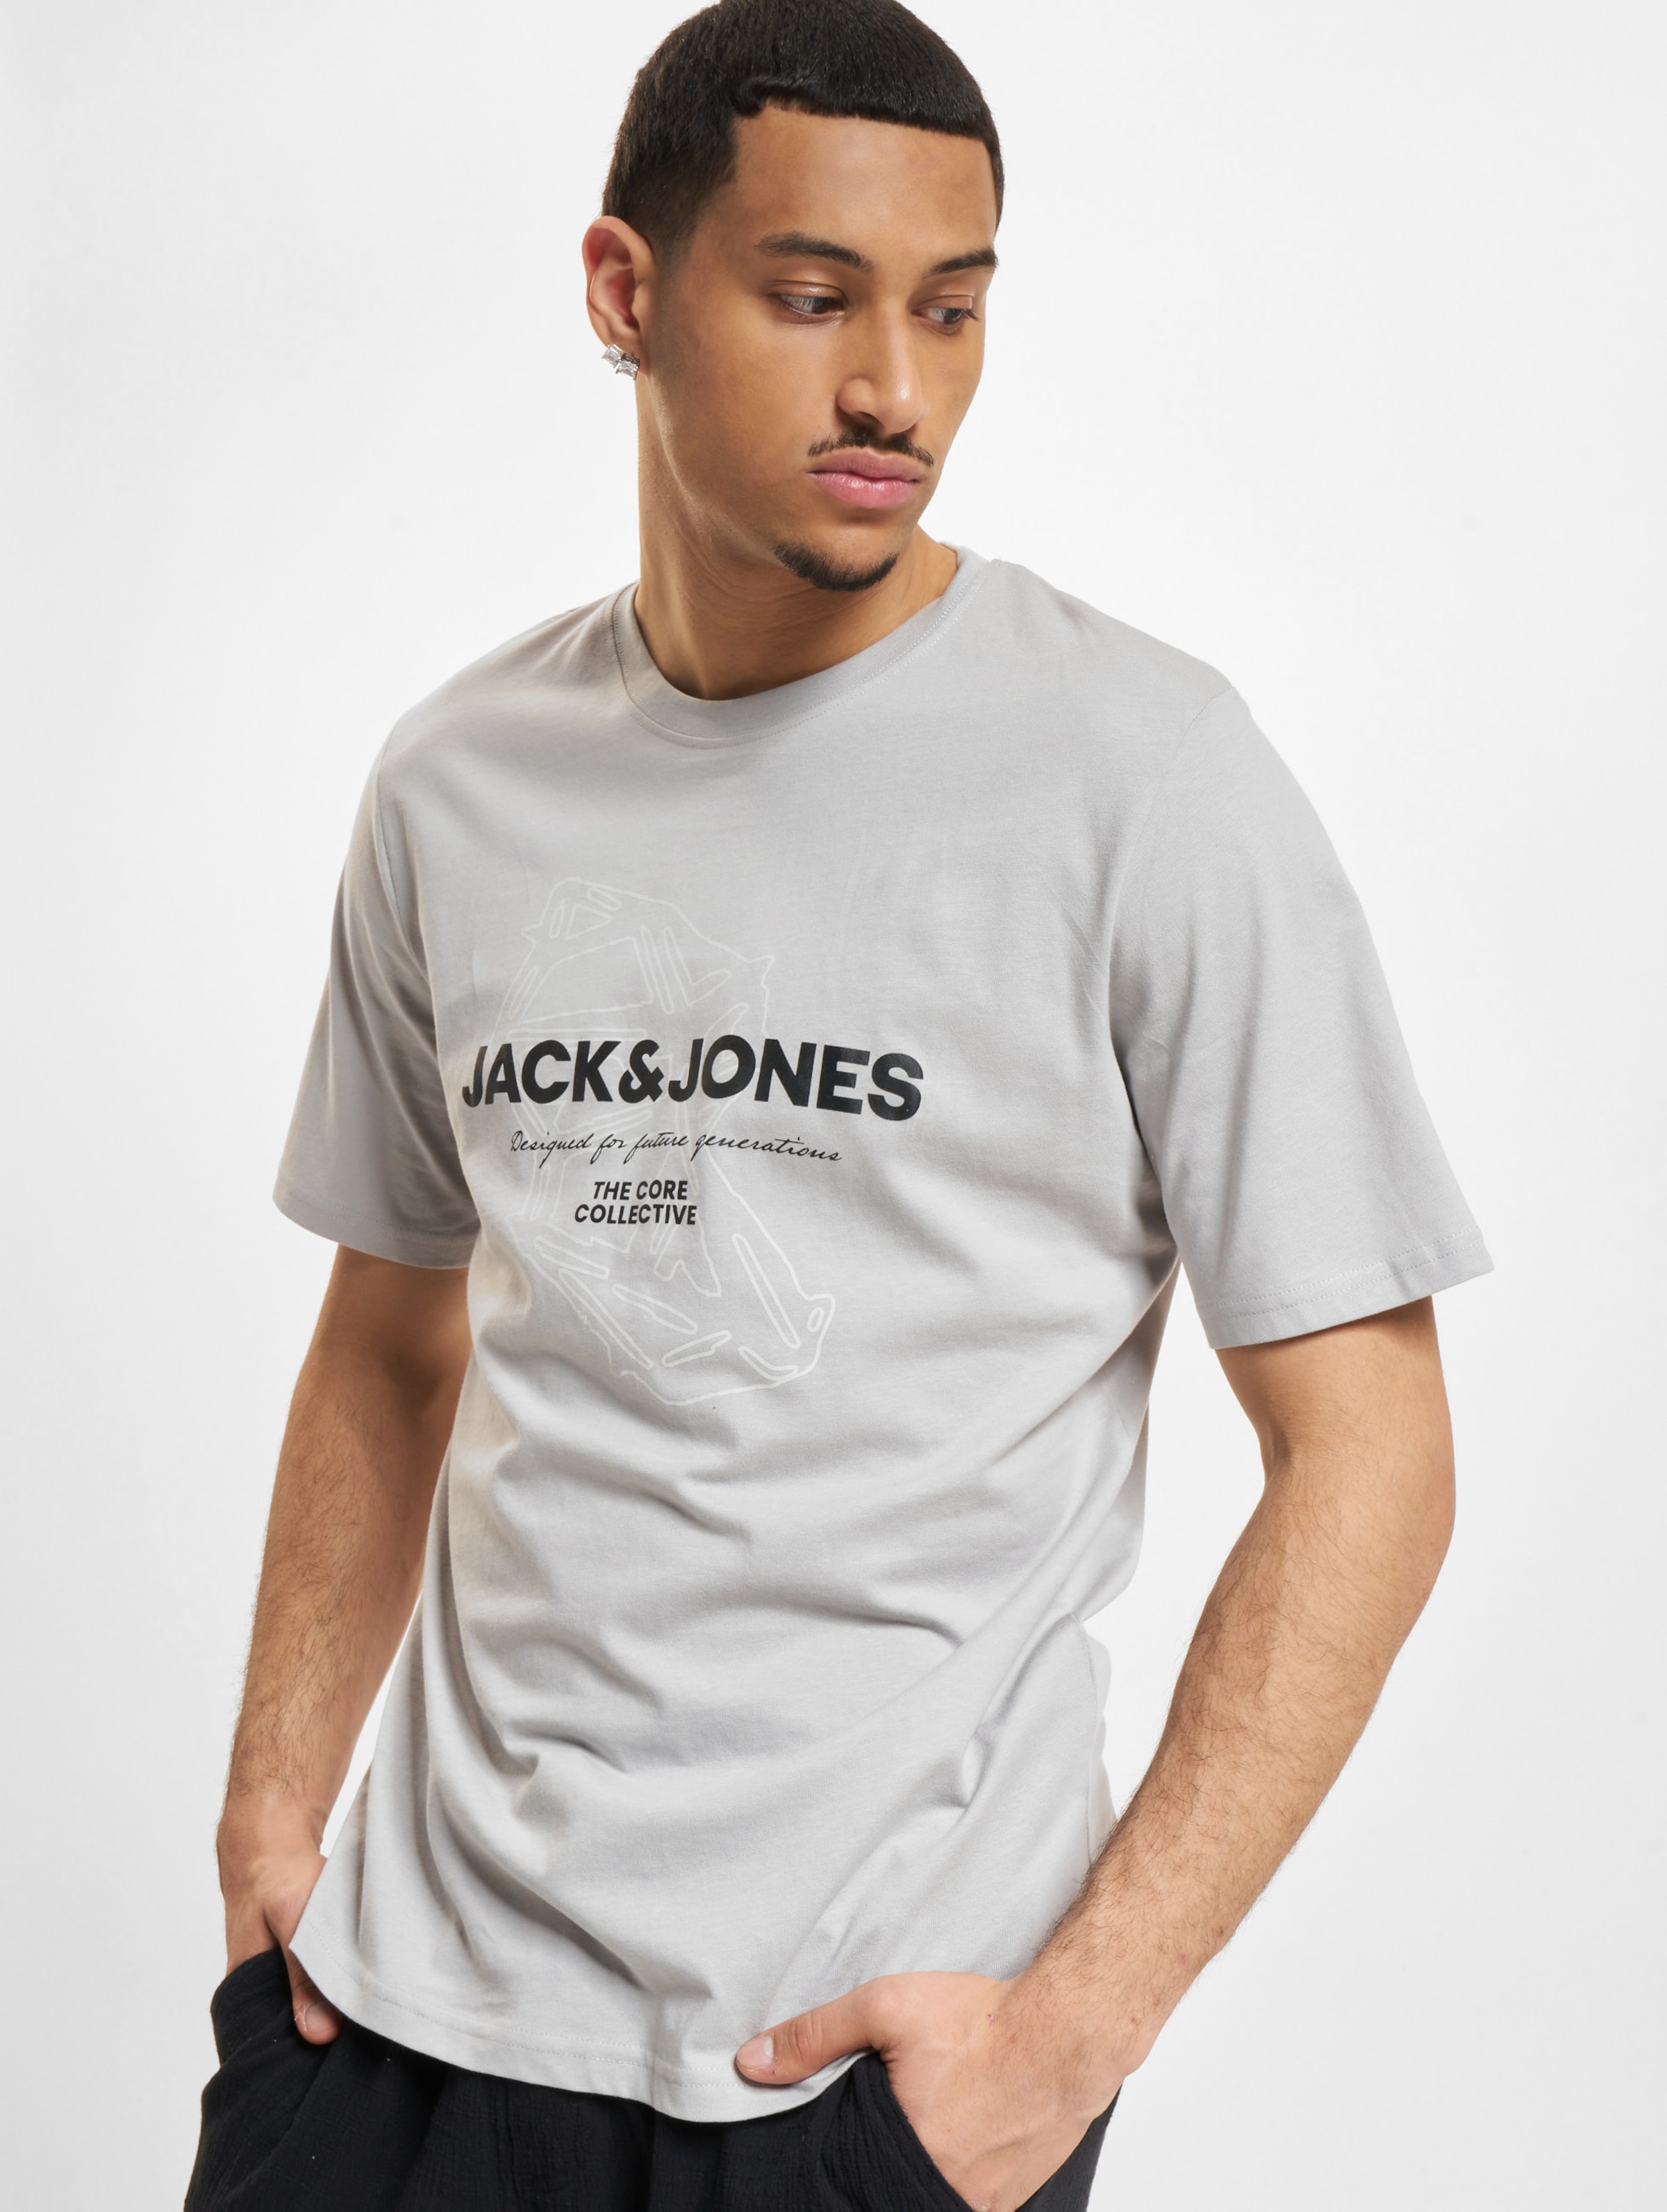 Jack & Jones Text Cotton Crew Neck T-Shirts Männer,Unisex op kleur grijs, Maat M